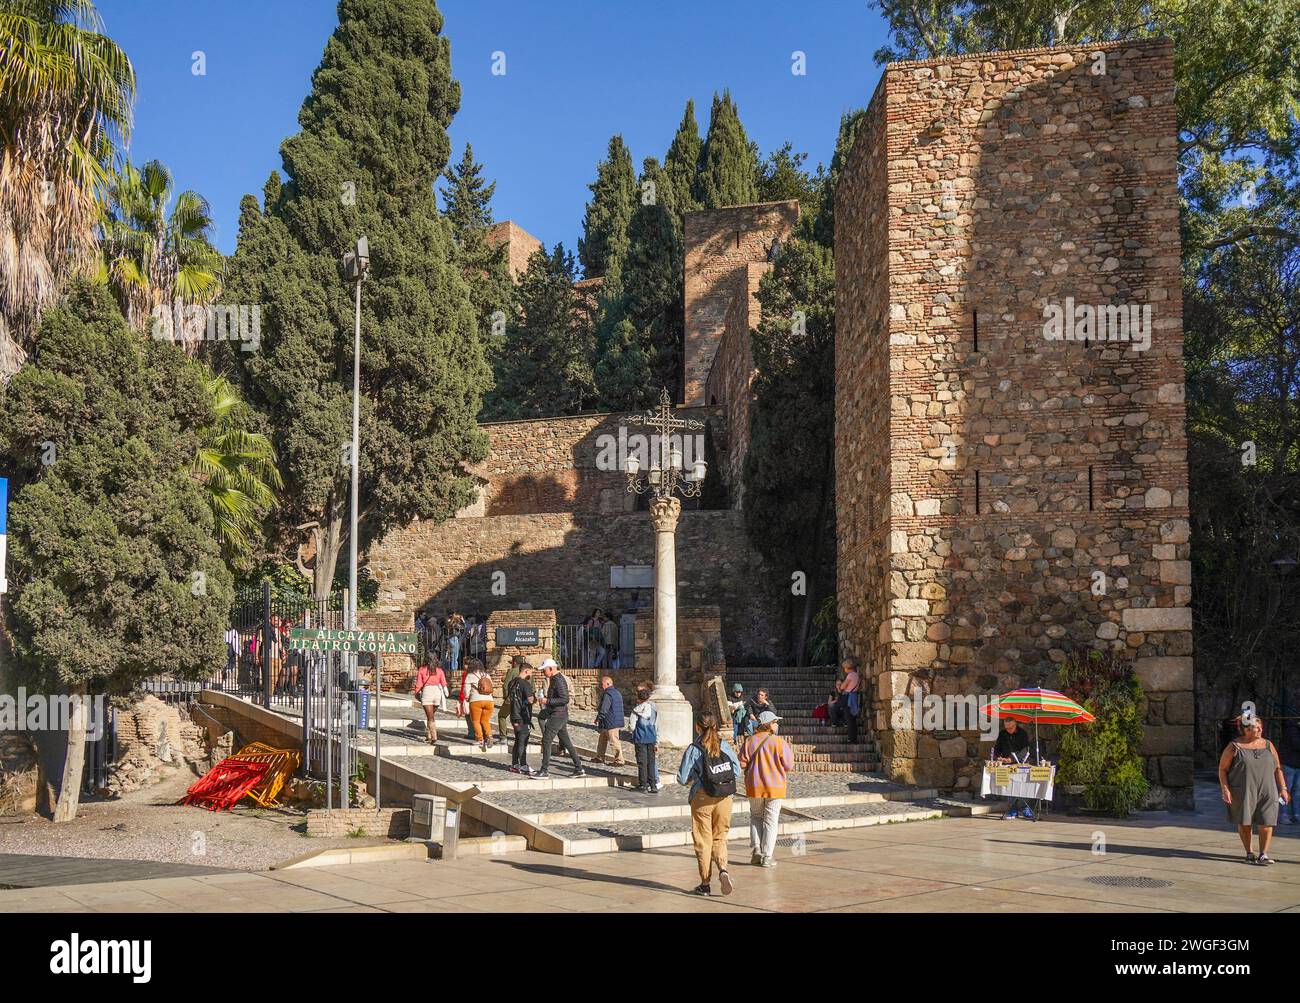 Young tourists in front of the entrance of Malaga Alcazaba. Ancient Moorish Alcazaba castle, Malaga, Andalusia, Spain. Stock Photo